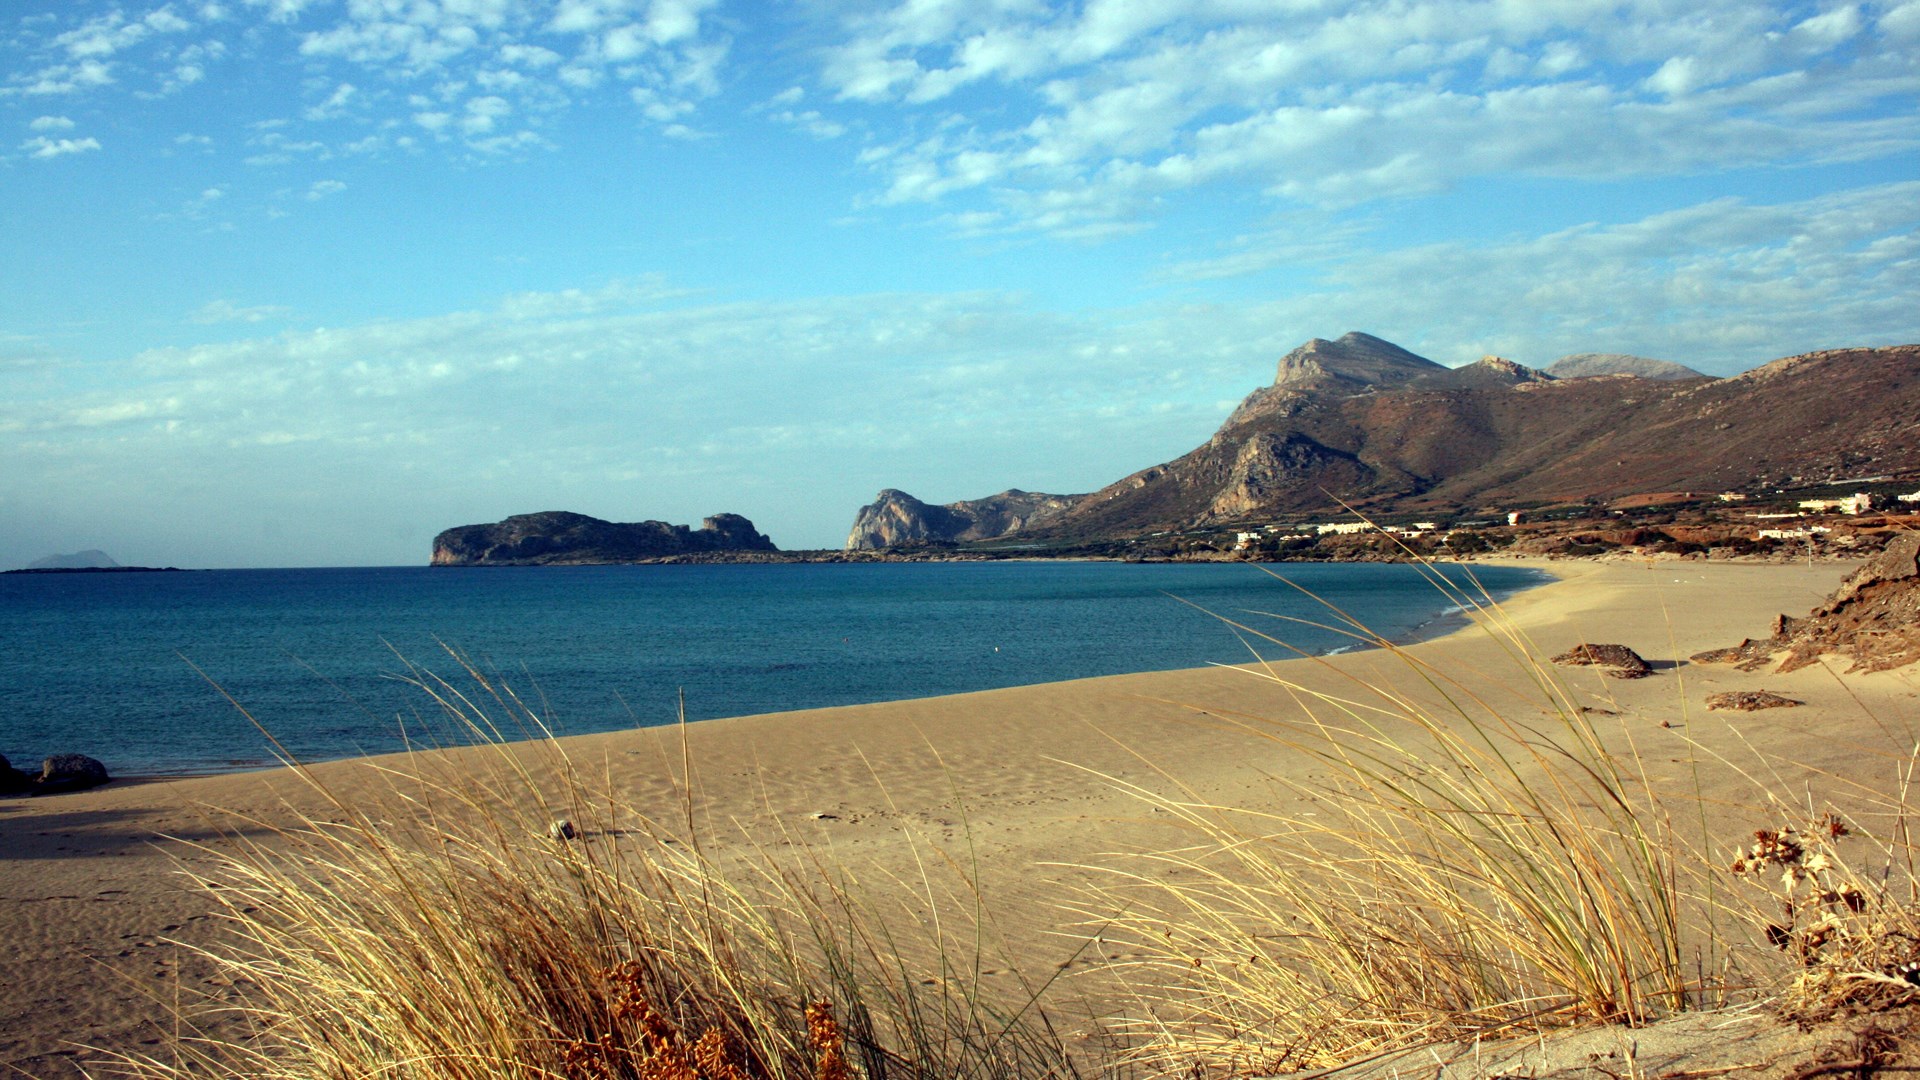 Falasarna Beach, Chania – Crete | 30 Jul 2014 | Alargo